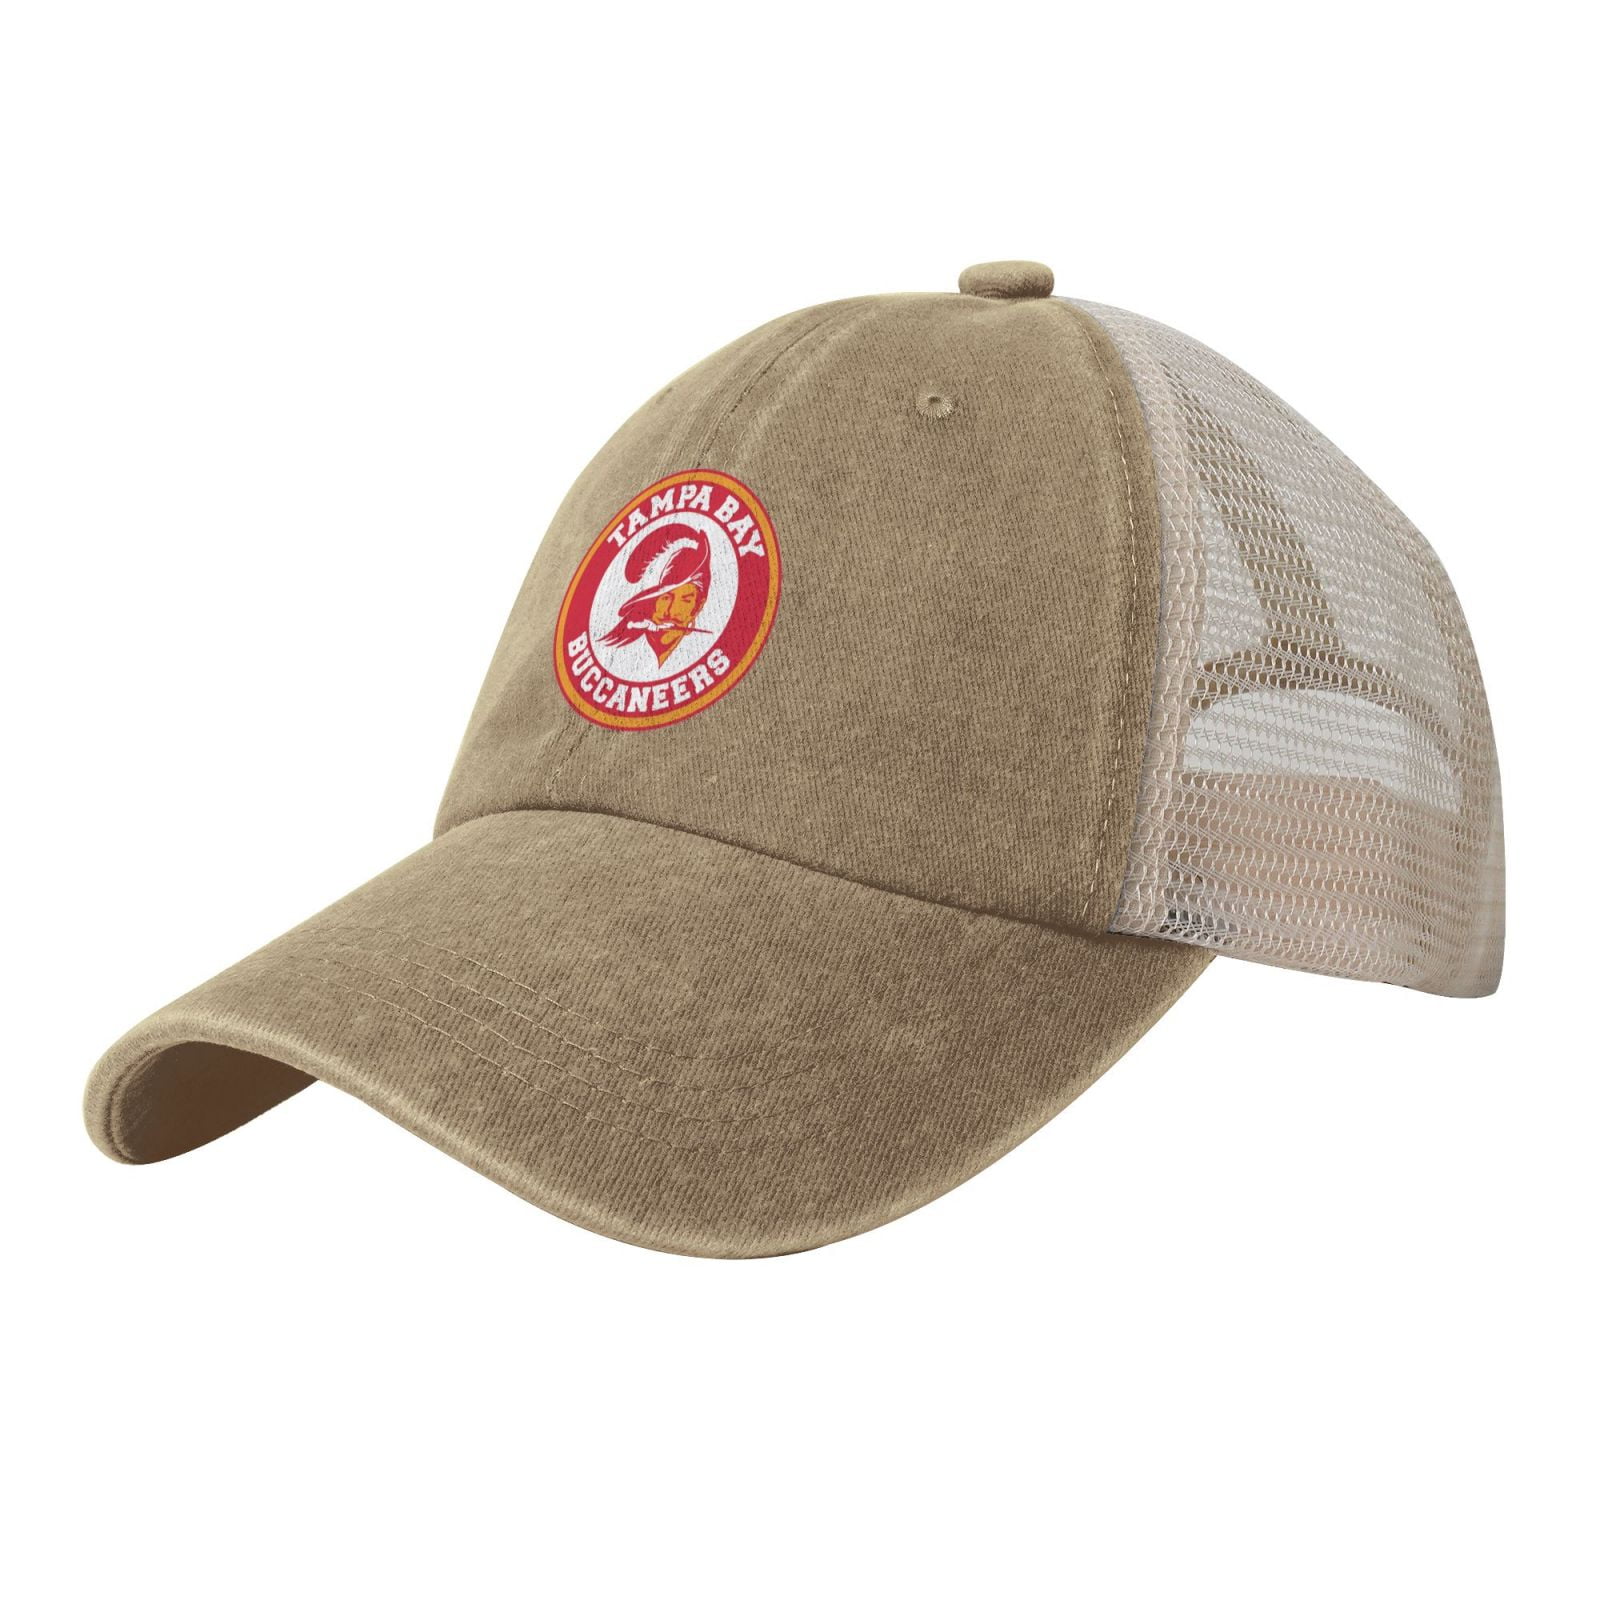 Tampa-Bay-Buccaneers Fashion Custom Golf Hats For Men Women, Adjustable ...